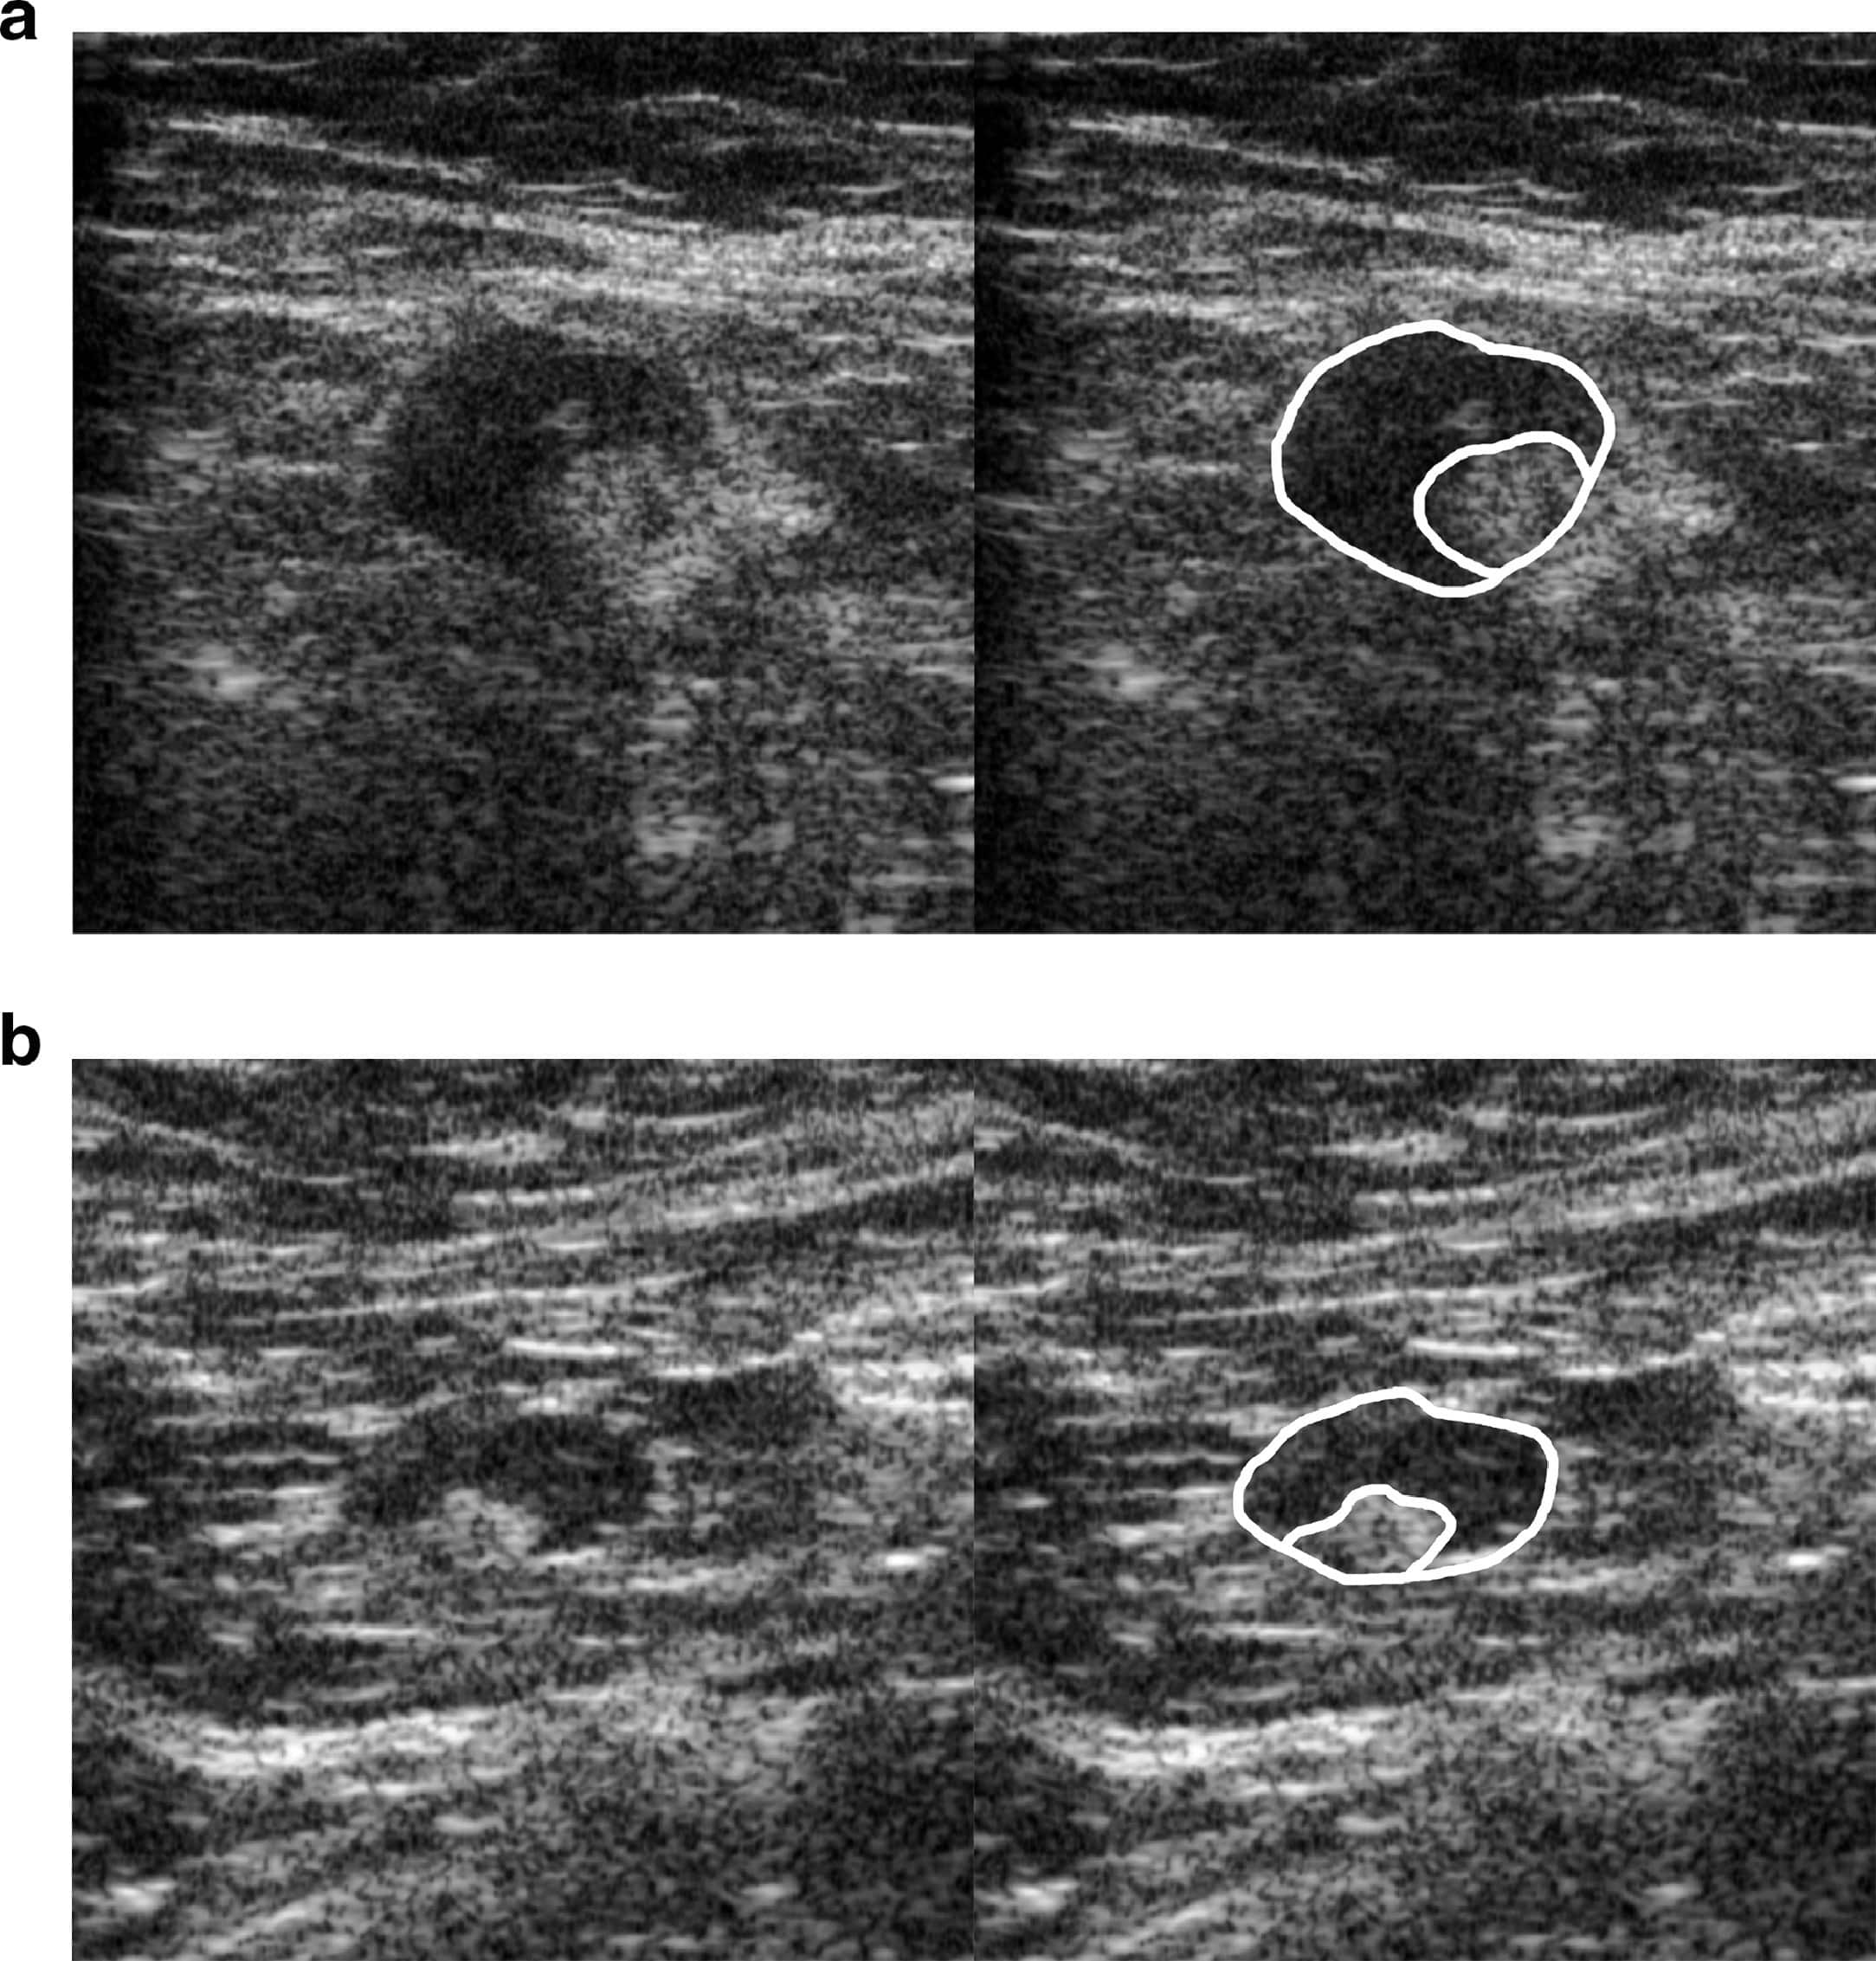 Quantitative Ultrasound Image Analysis of Axillary Lymph Nodes to ...